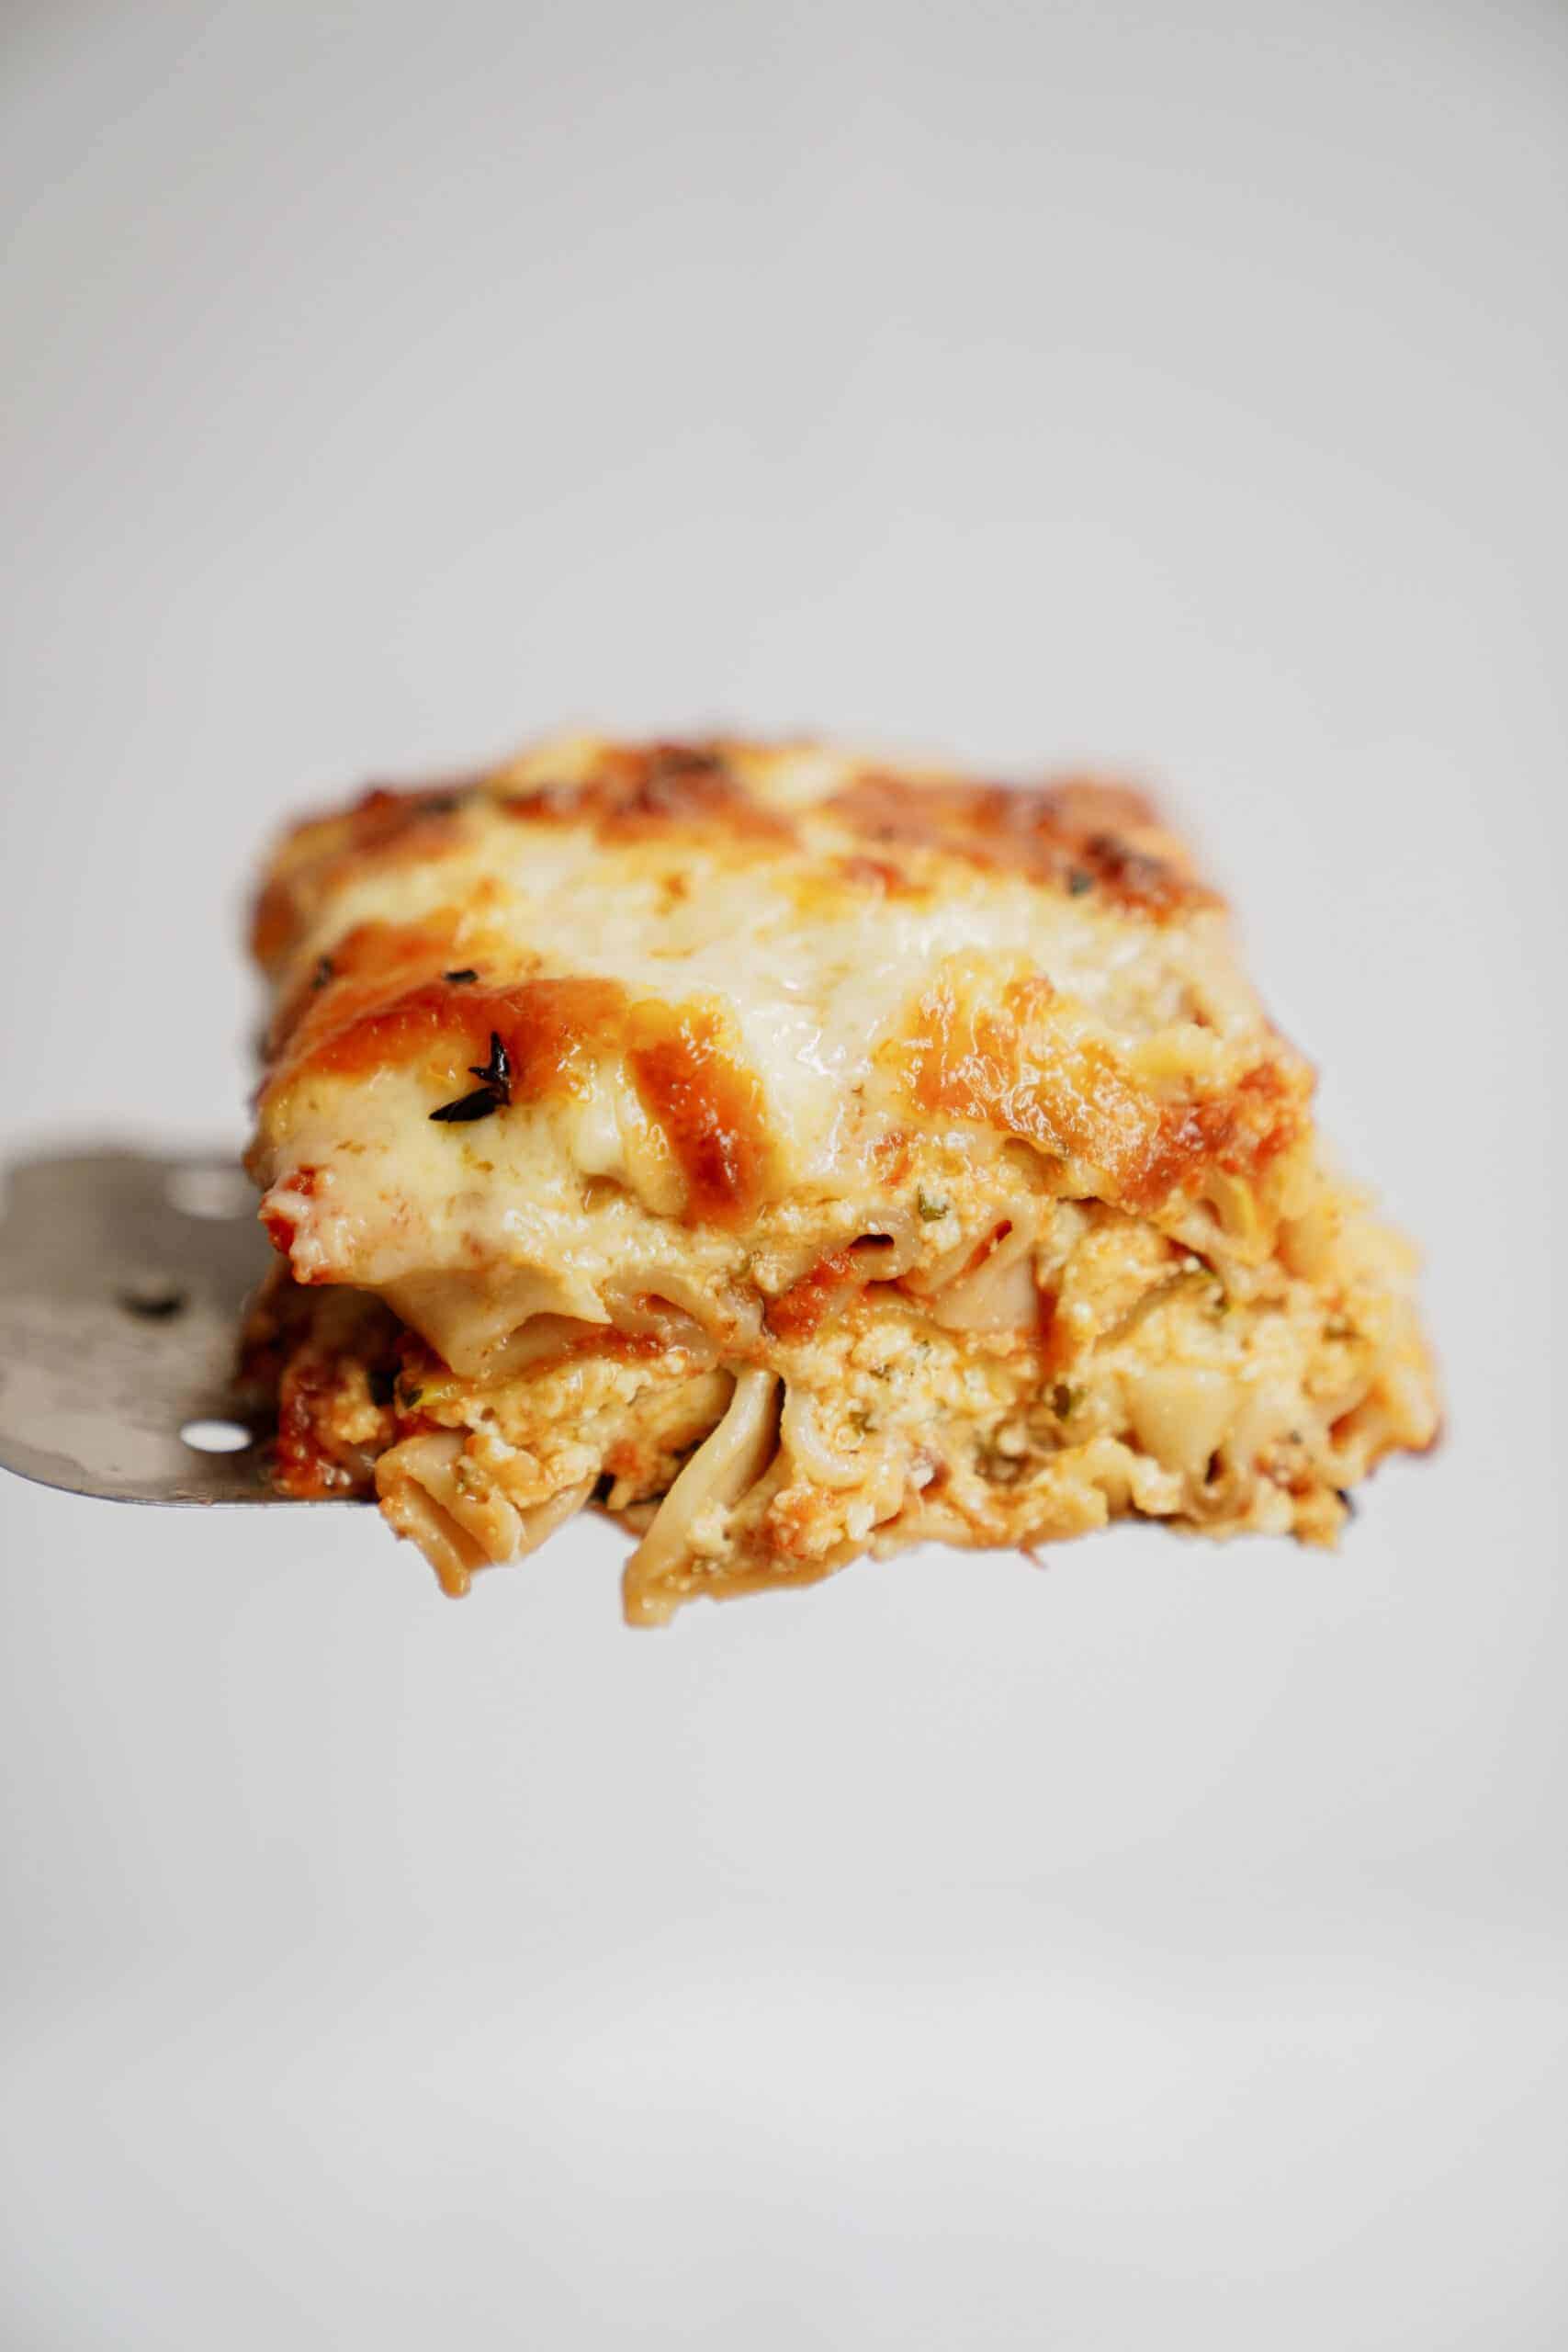 Slice of lasagna on a plate